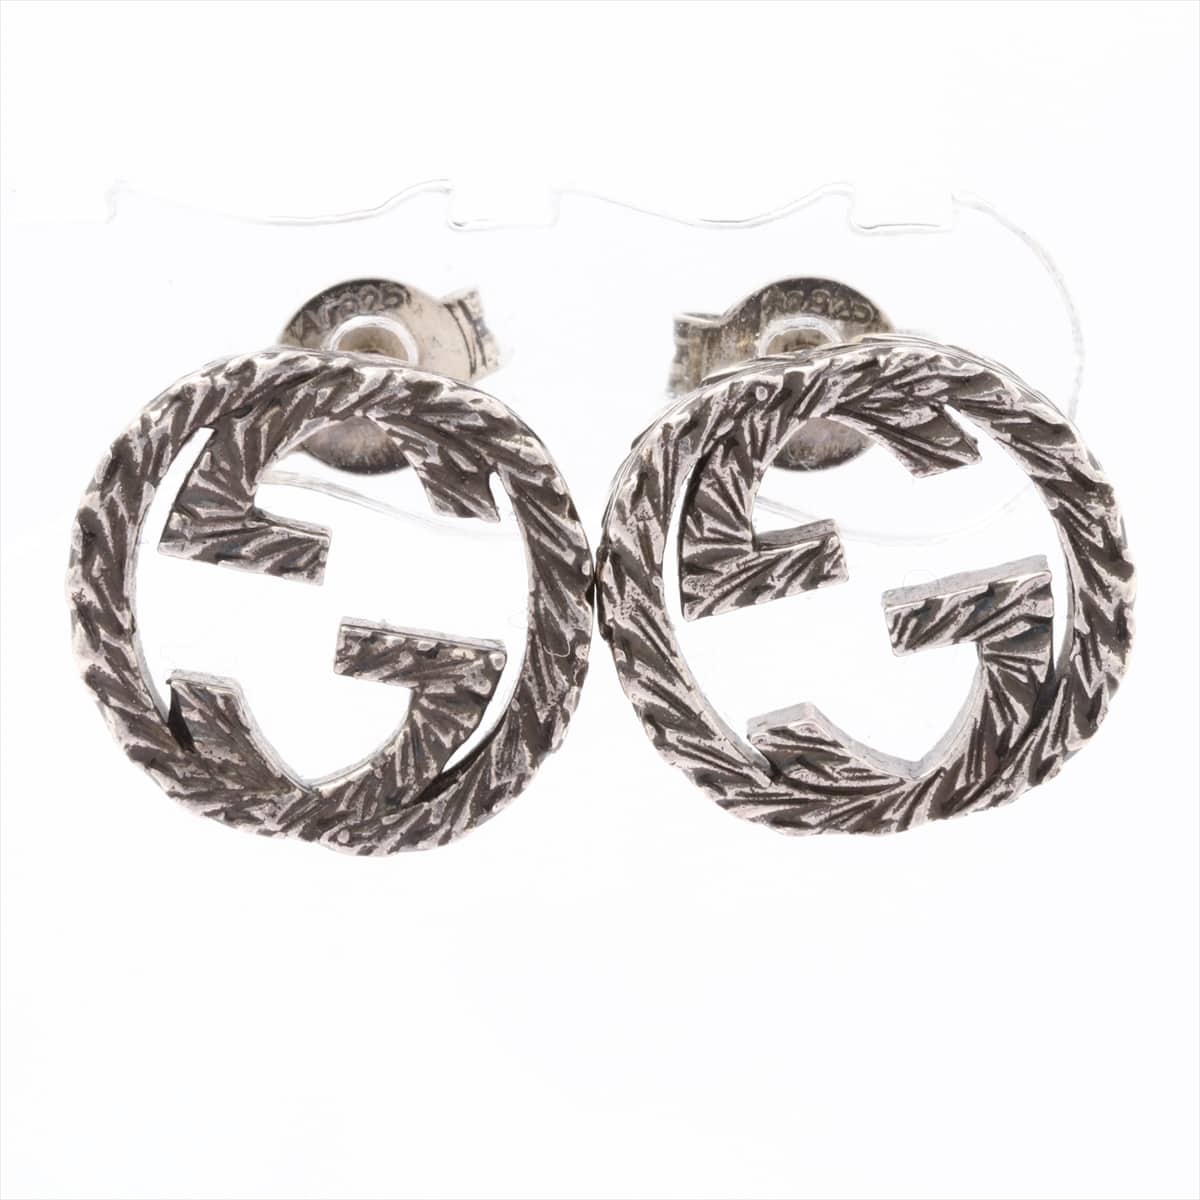 Gucci Interlocking Piercing jewelry 925 4.5g Silver Arabesque